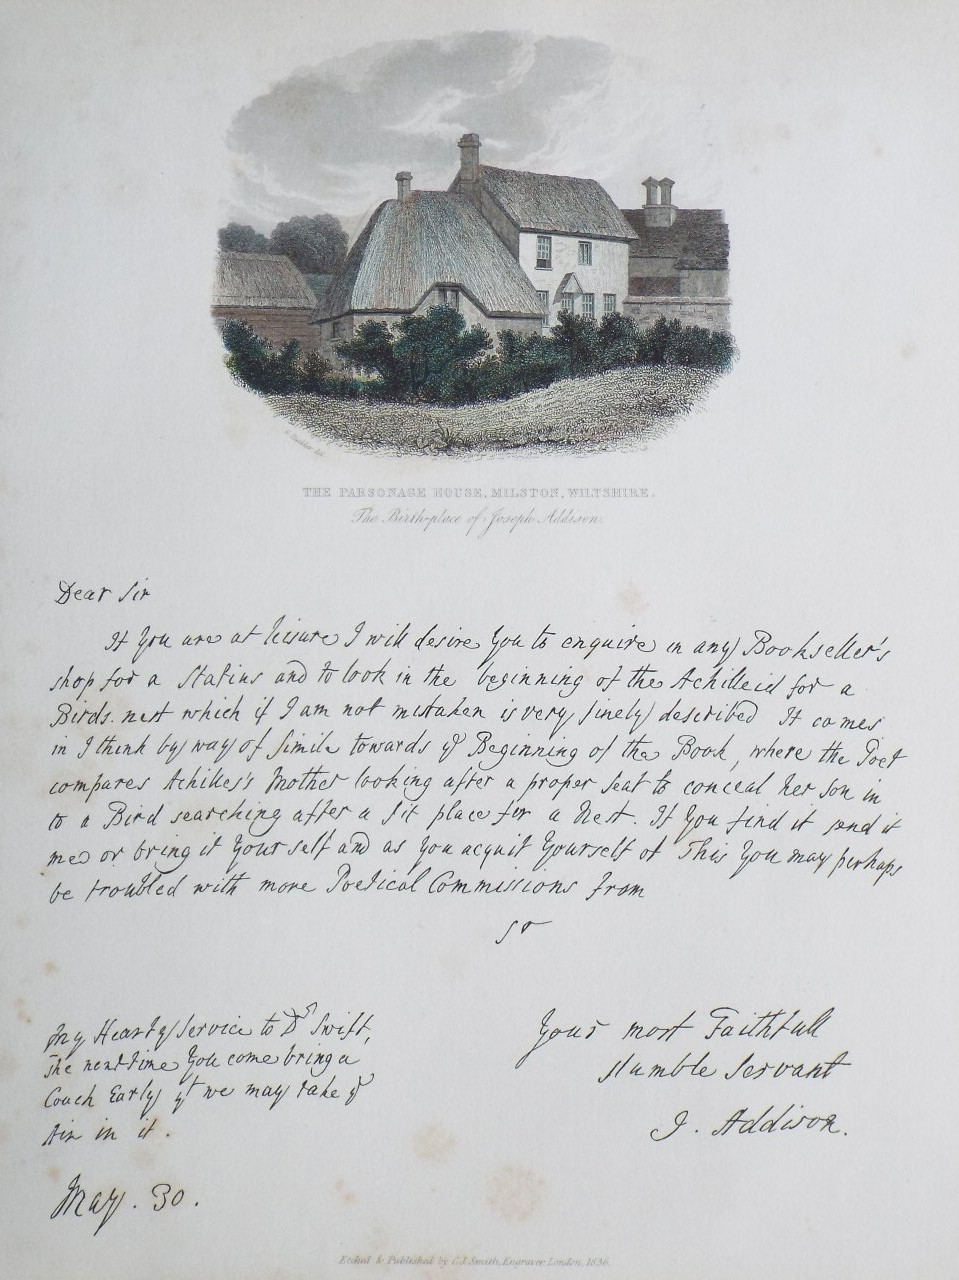 Print - The Parsonage House, Milston, Wiltshire. The Birth-place of Joseph Addison. - Smith